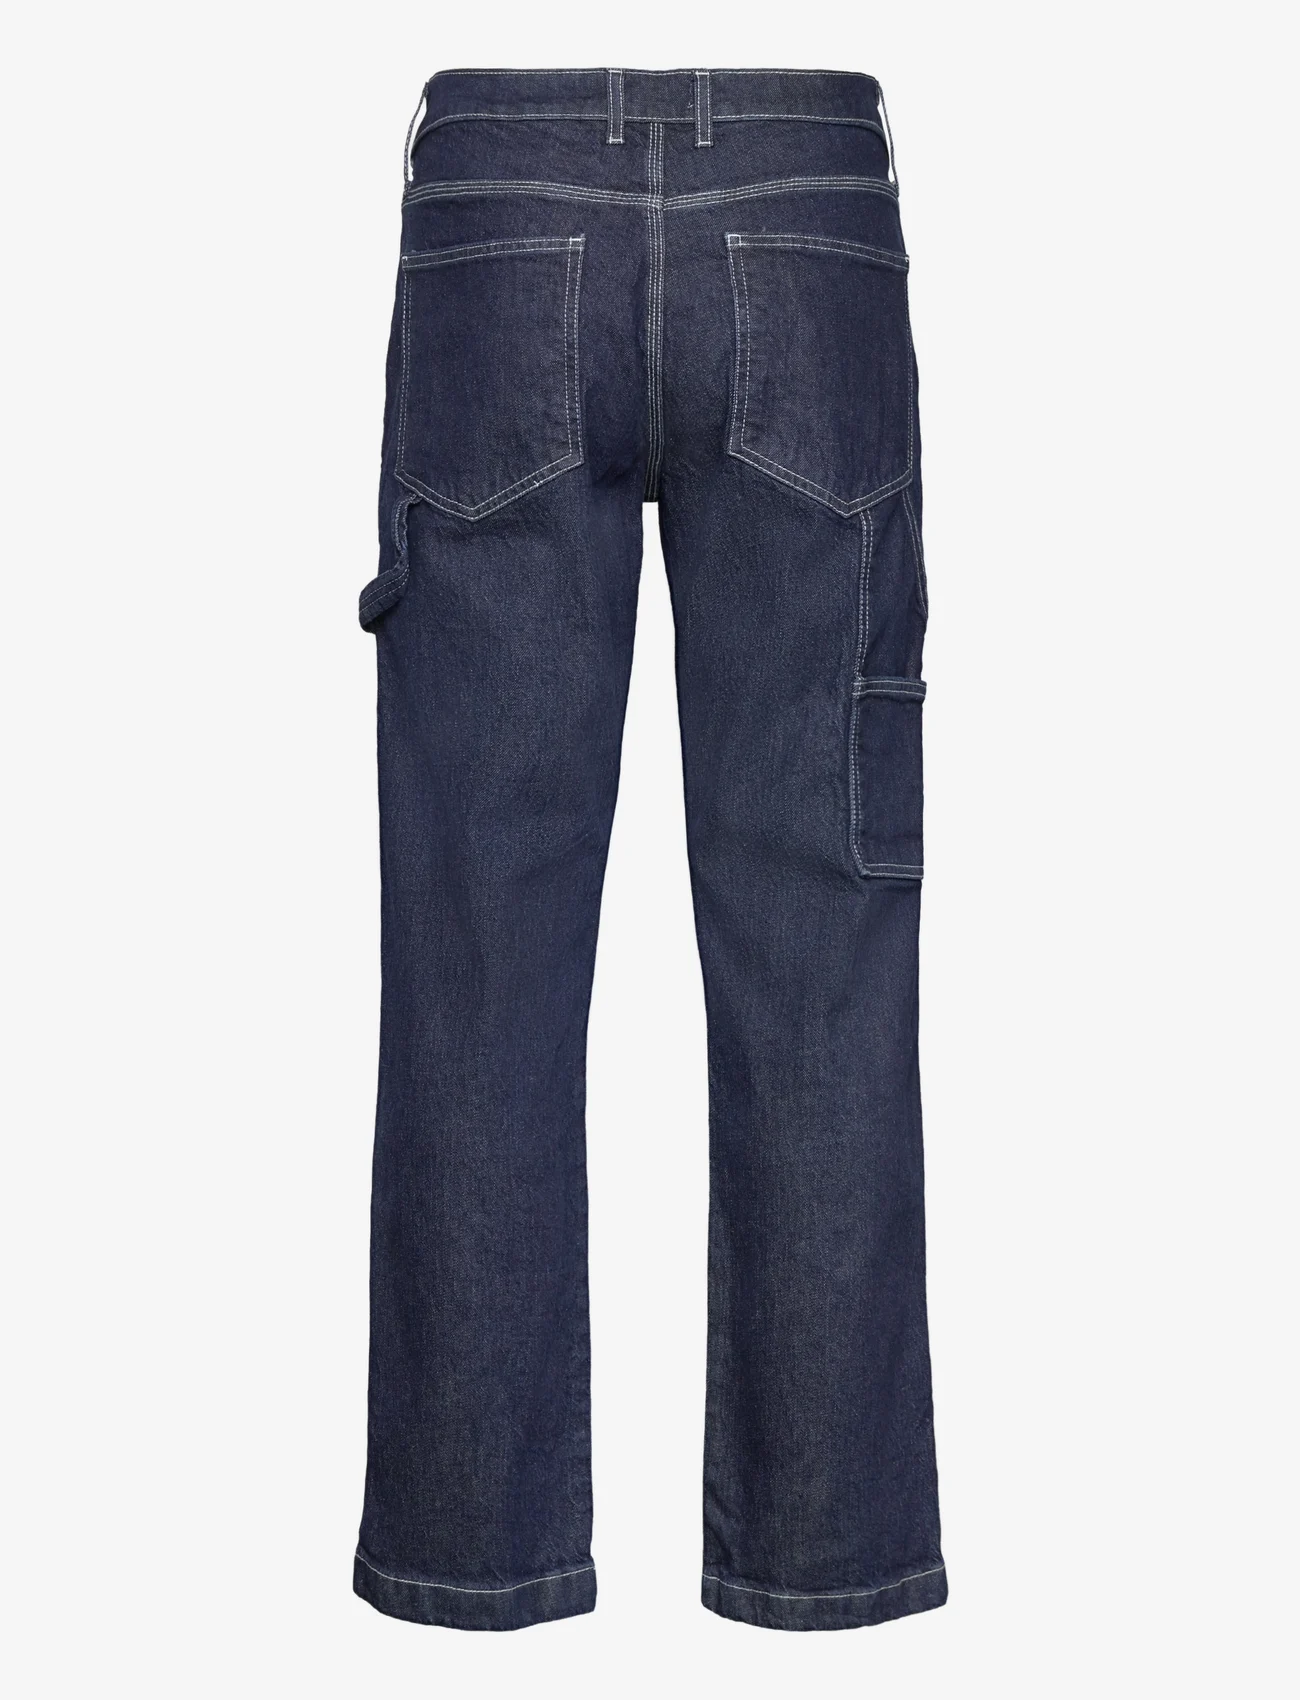 Denim project - DPWorkwear Straight Jeans - džinsi - dark blue rinse - 1